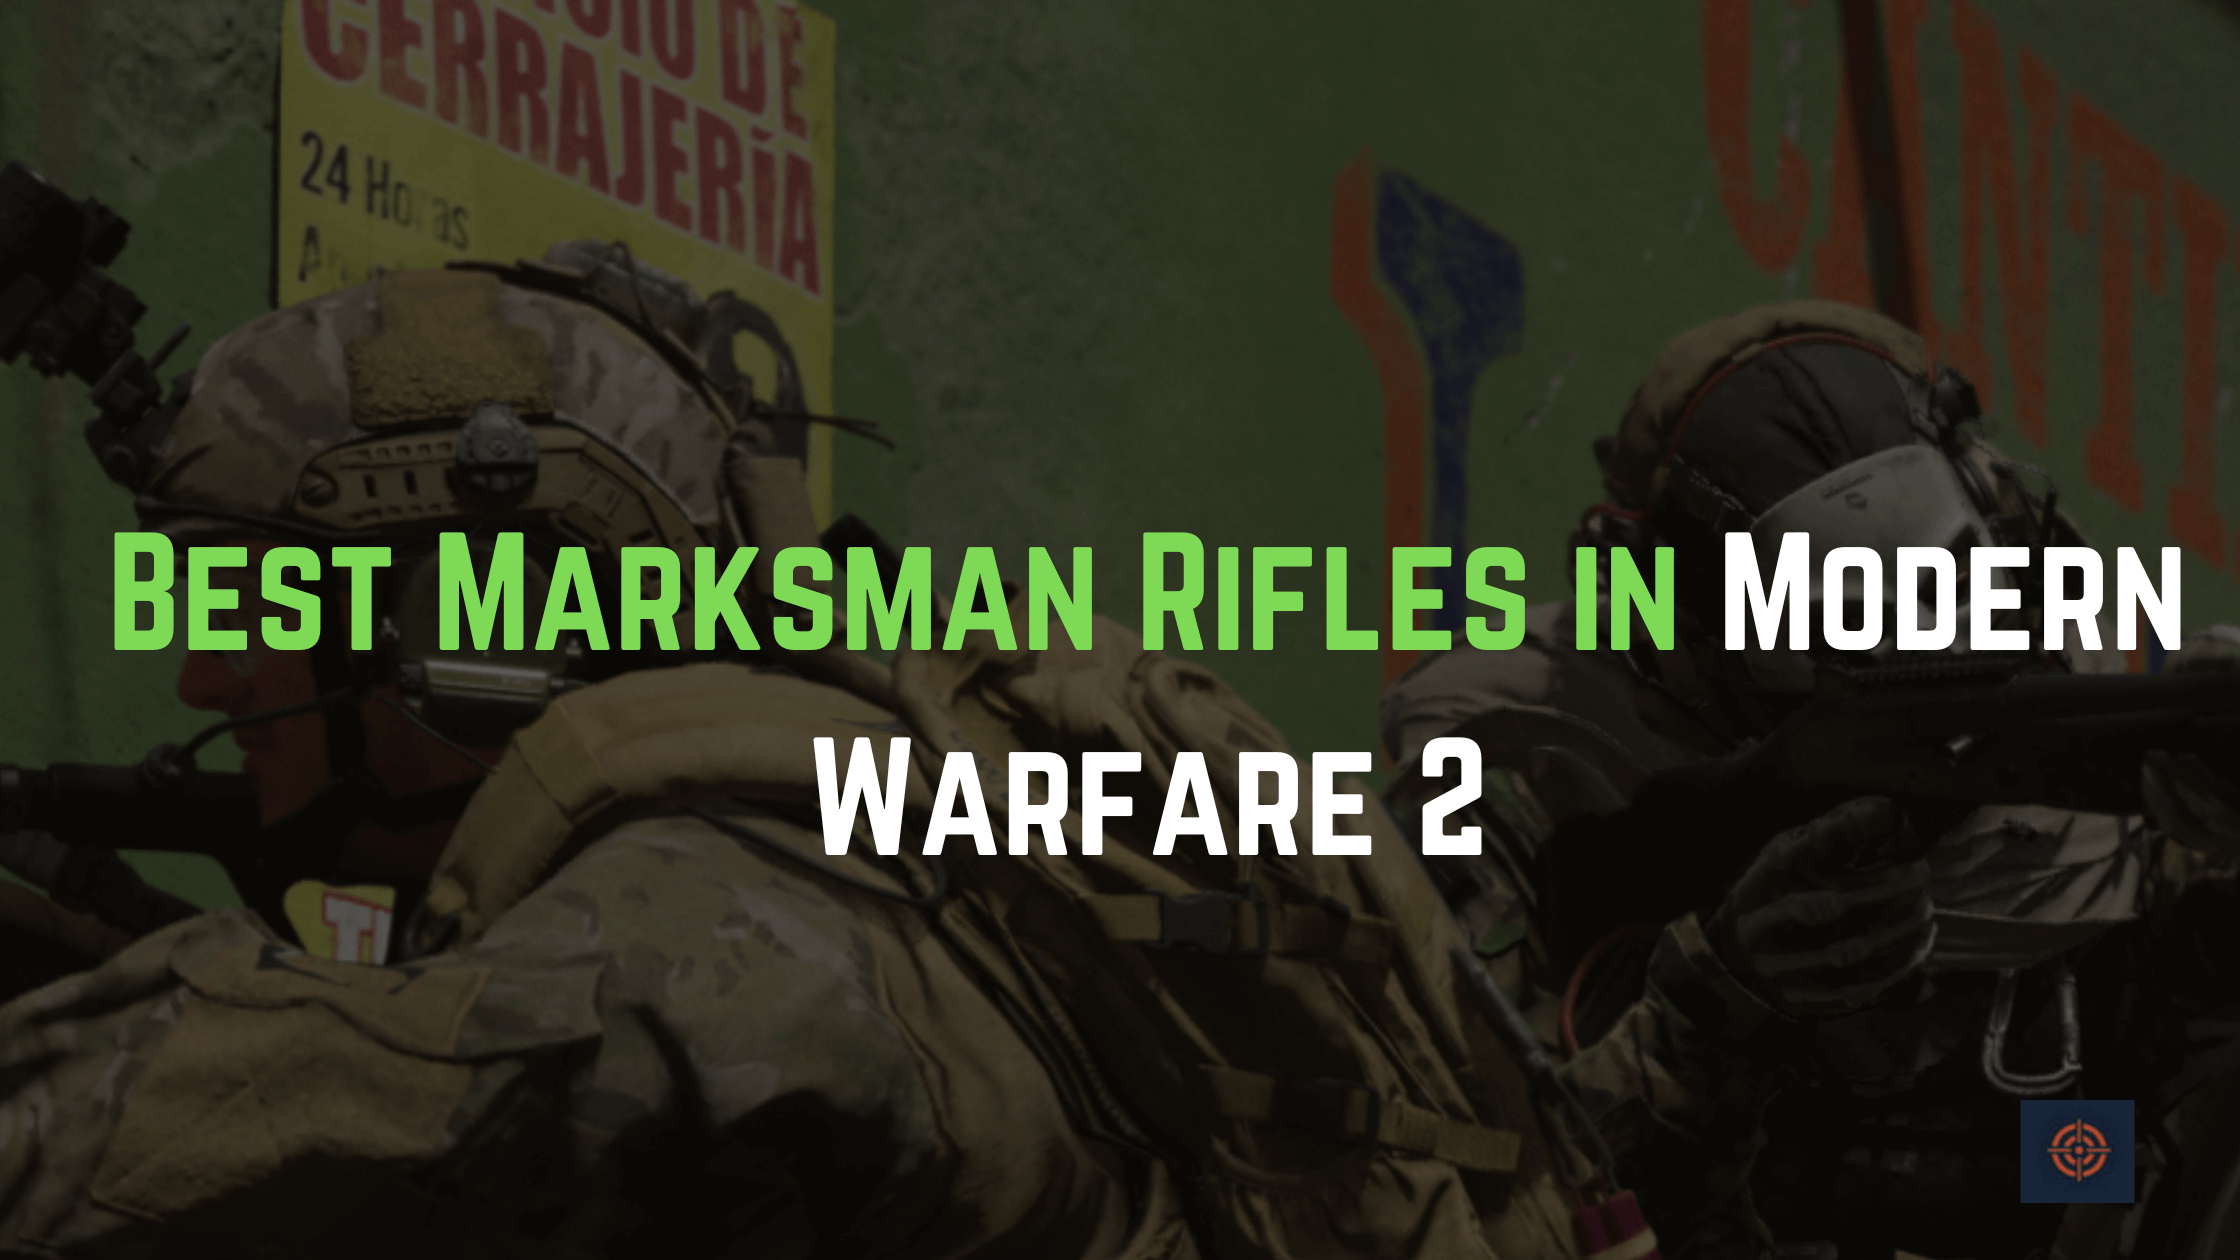 Best Marksman Rifles in Modern Warfare 2